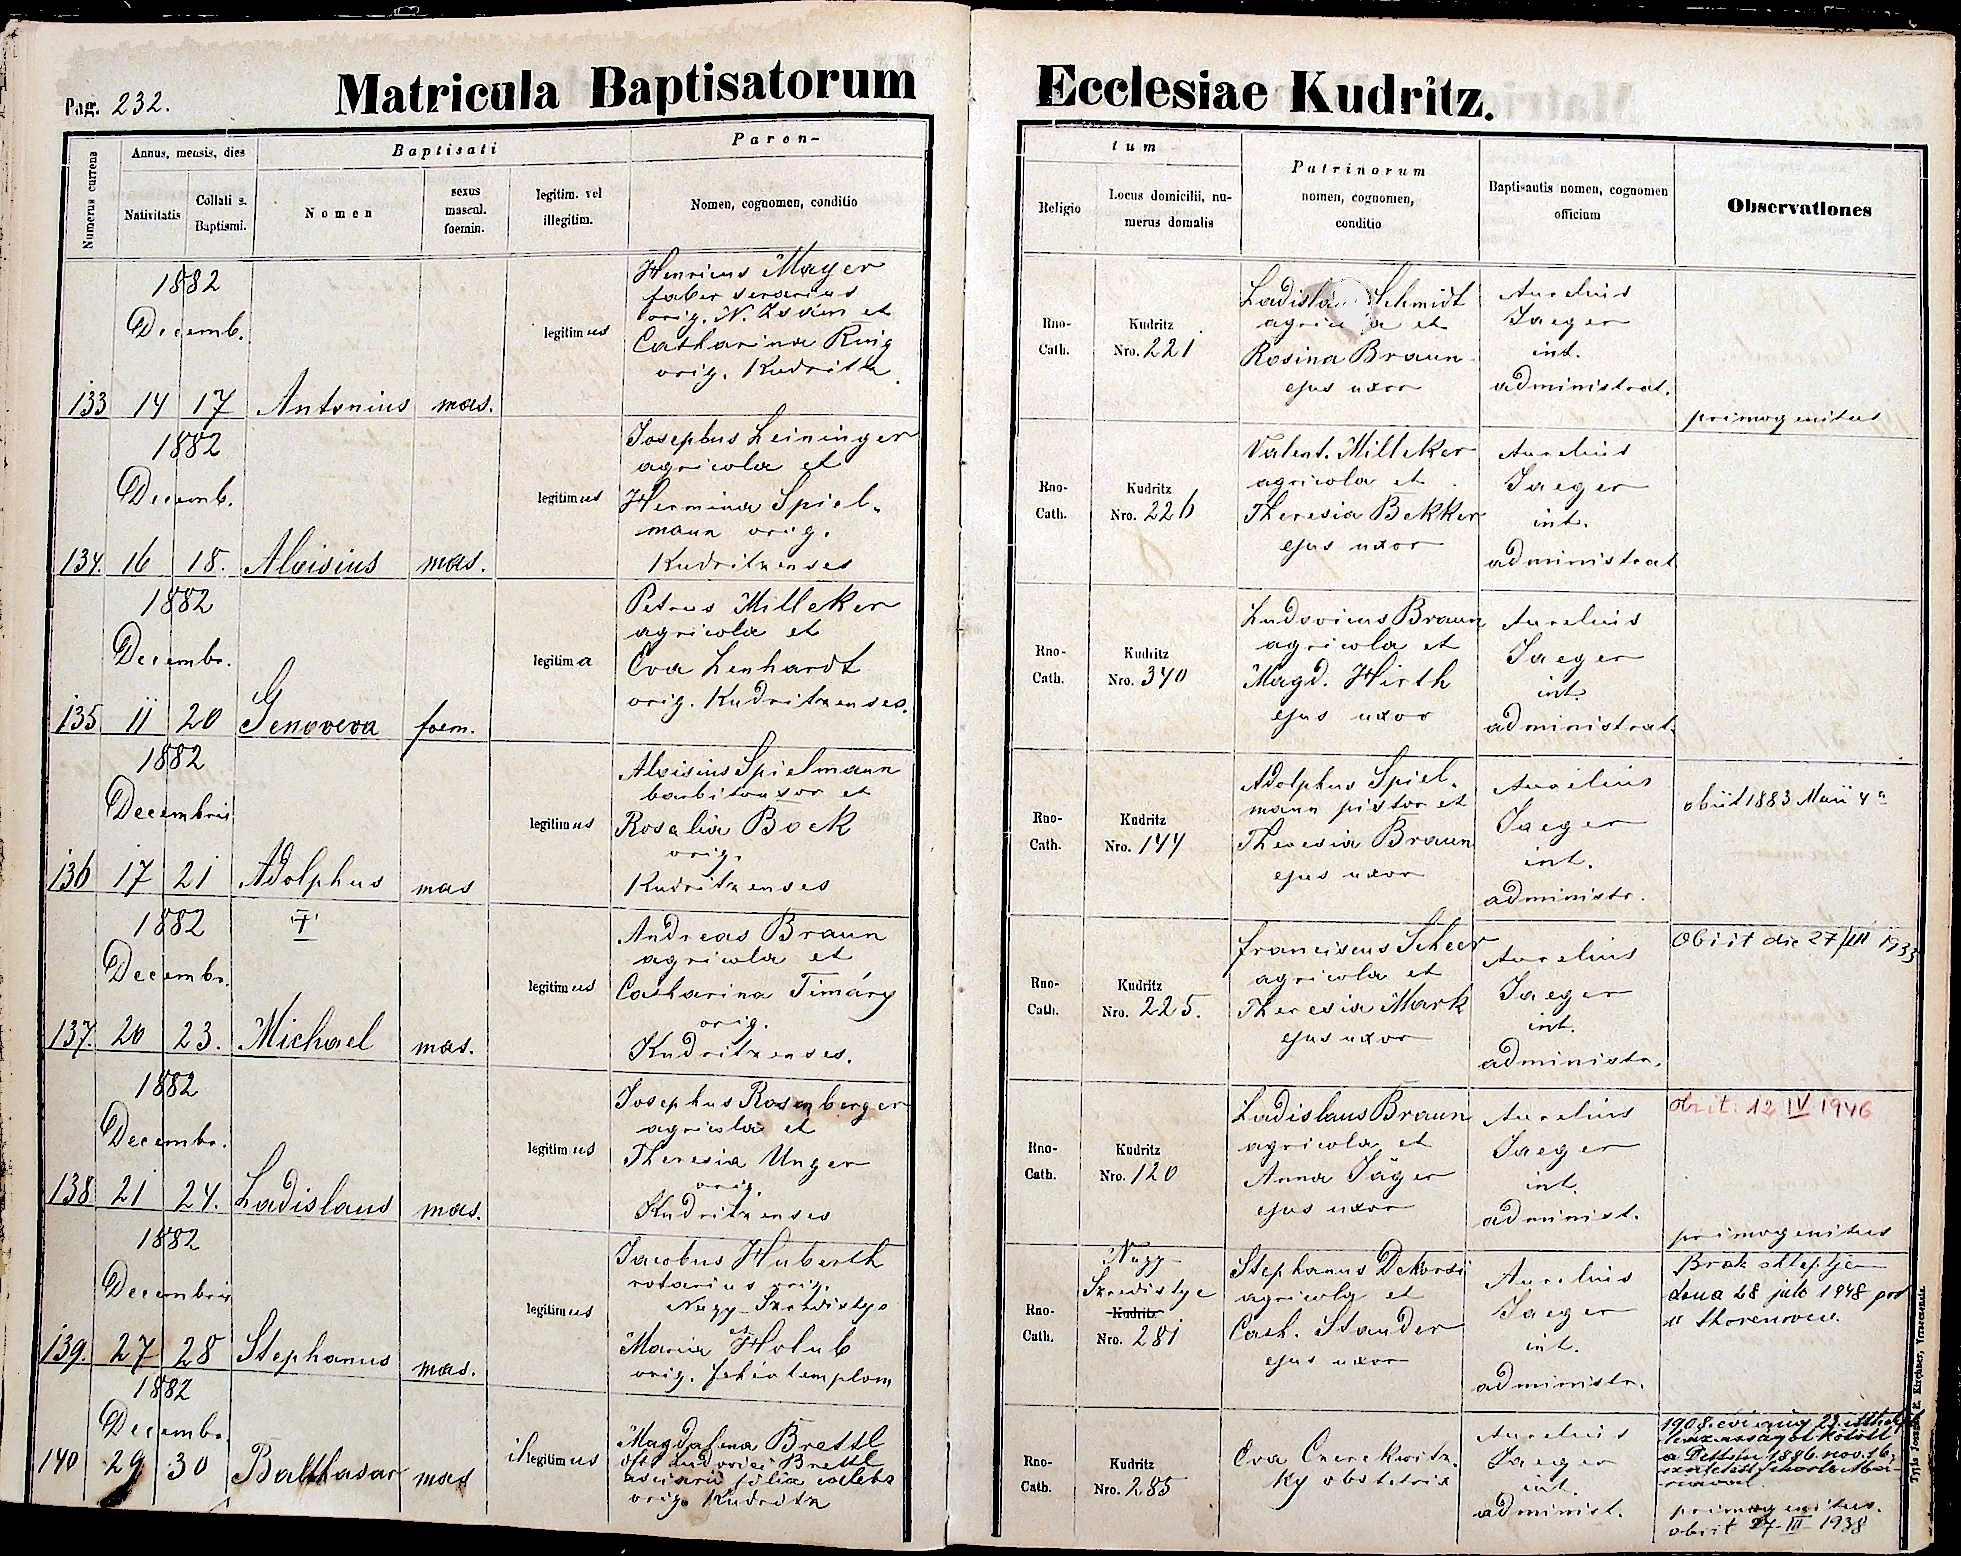 images/church_records/BIRTHS/1880-1883B/1882/232